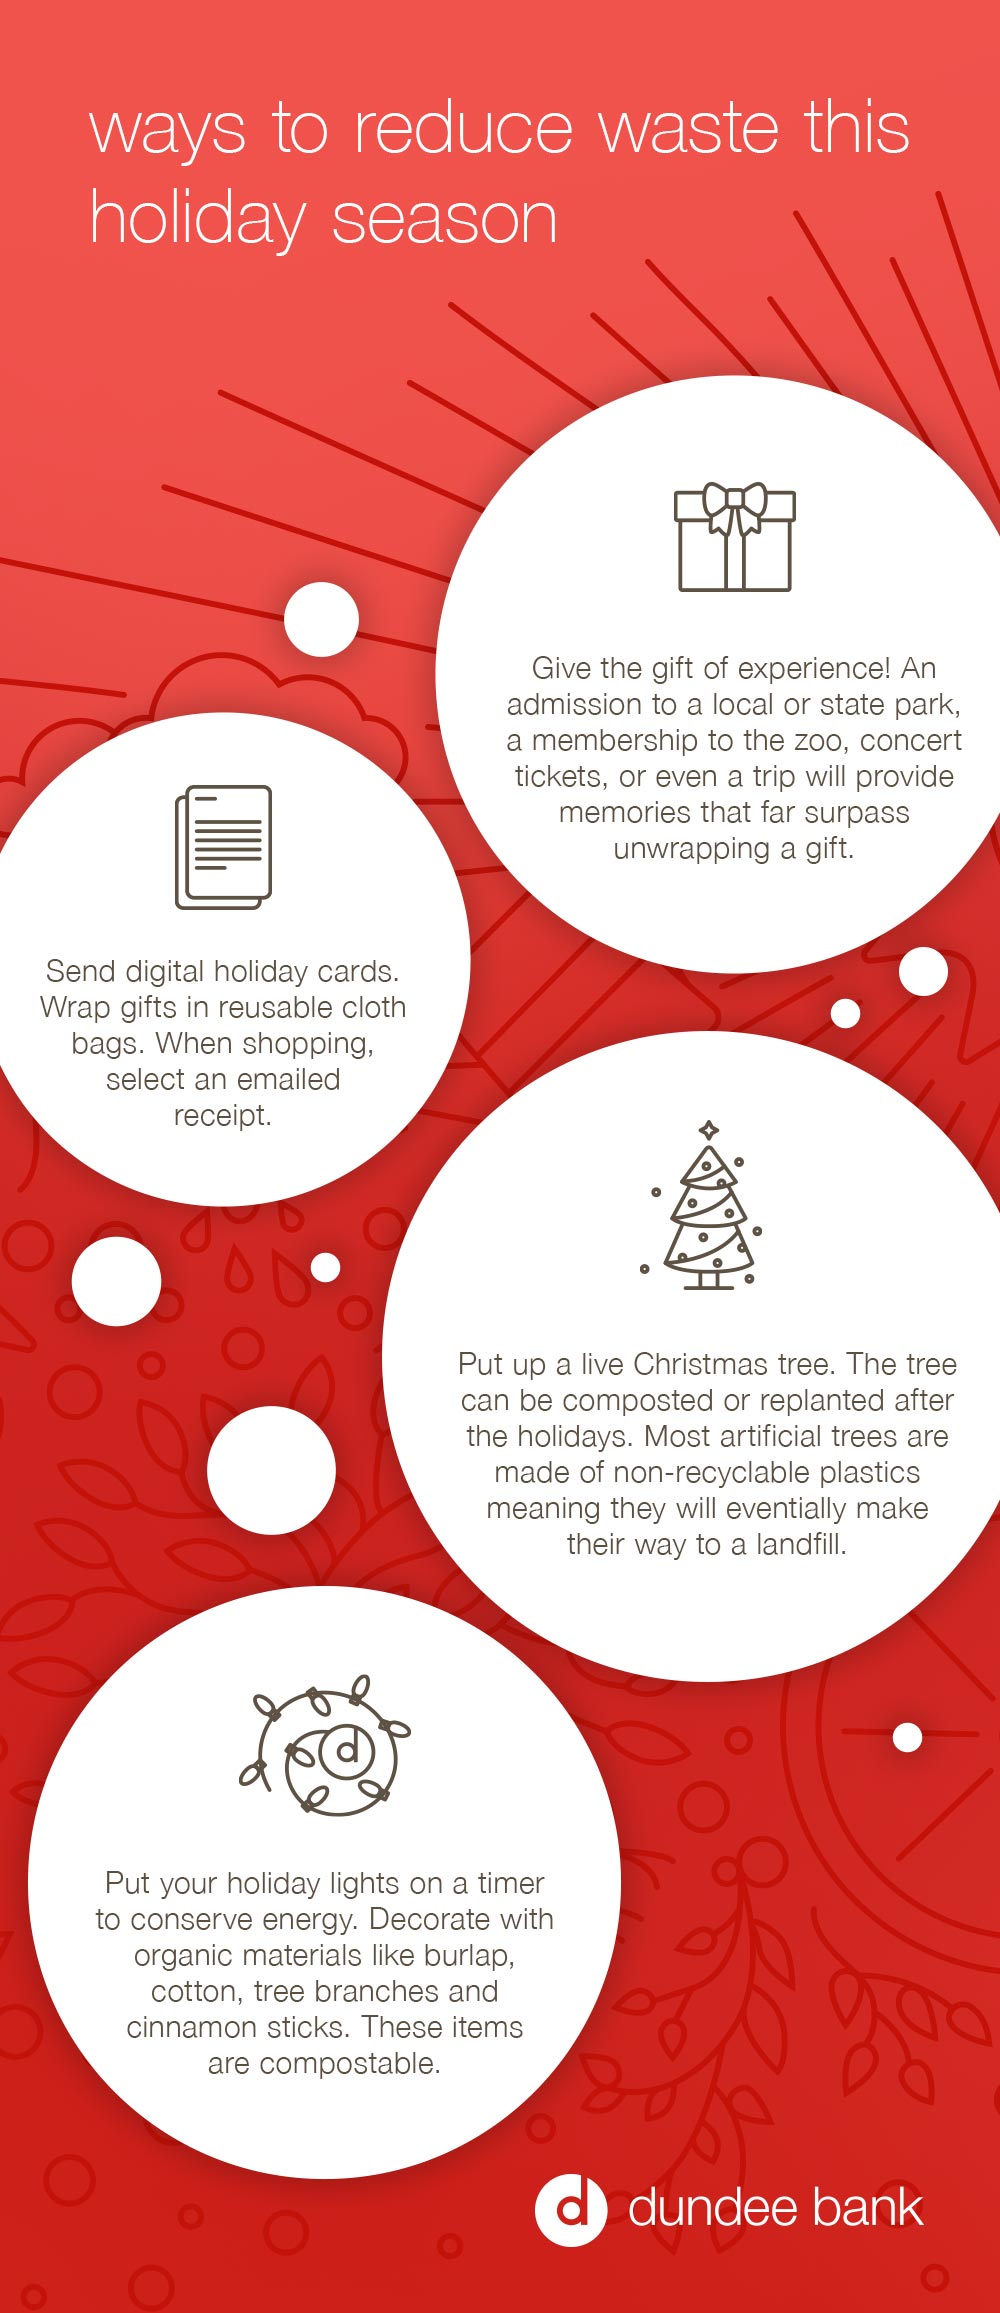 Ways to reduce waste this holiday season.